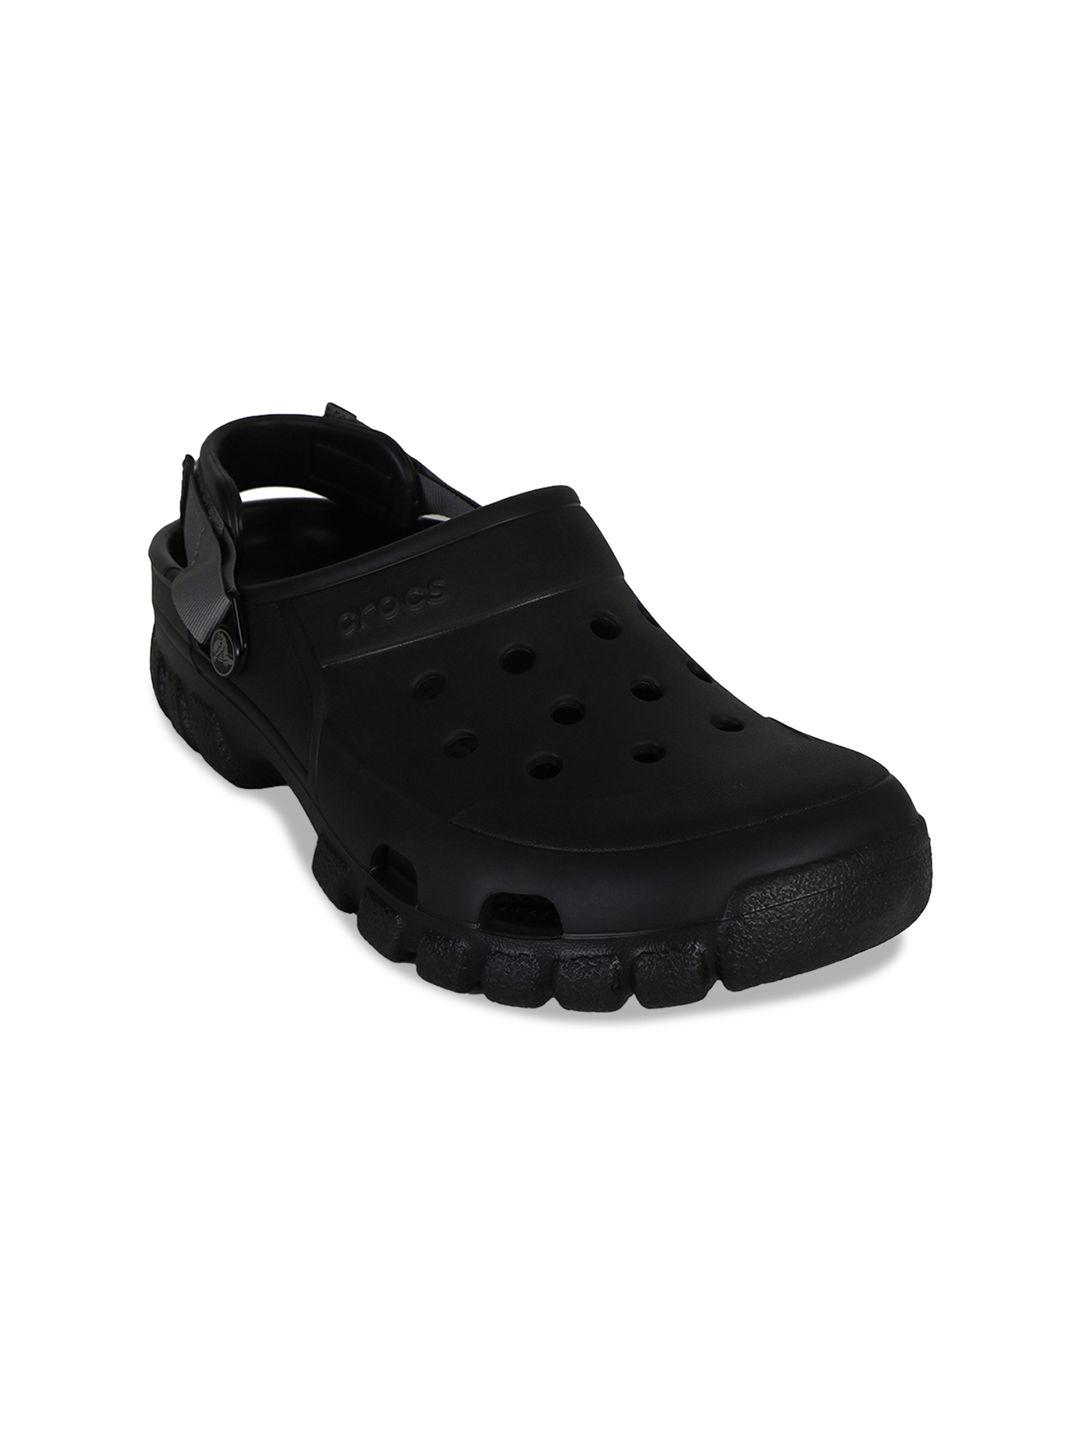 crocs women black solid clogs